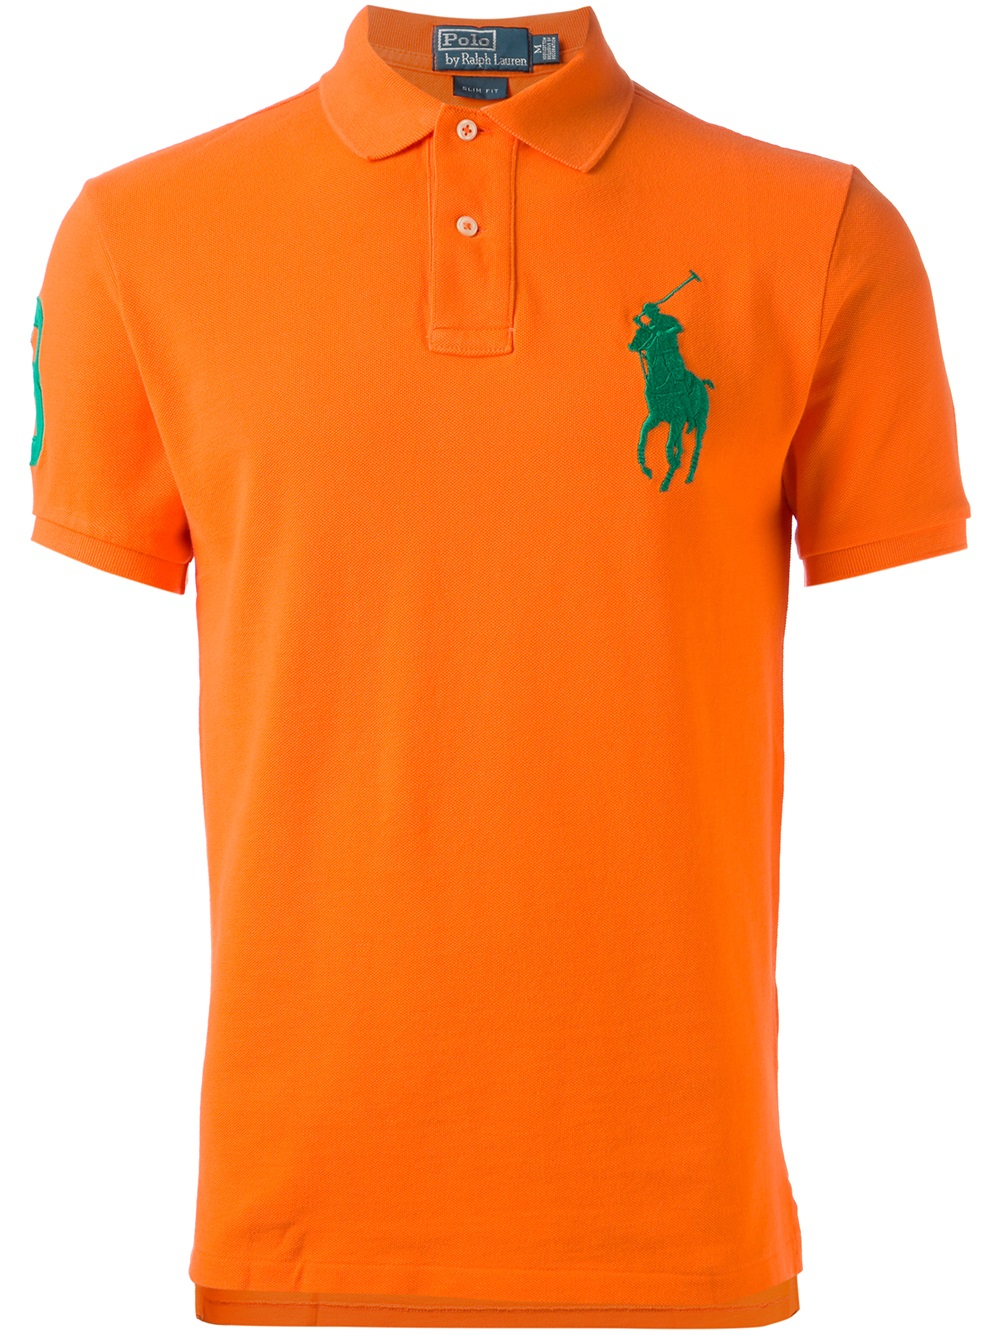 Polo Ralph Lauren Classic Polo Shirt in Orange for Men - Lyst